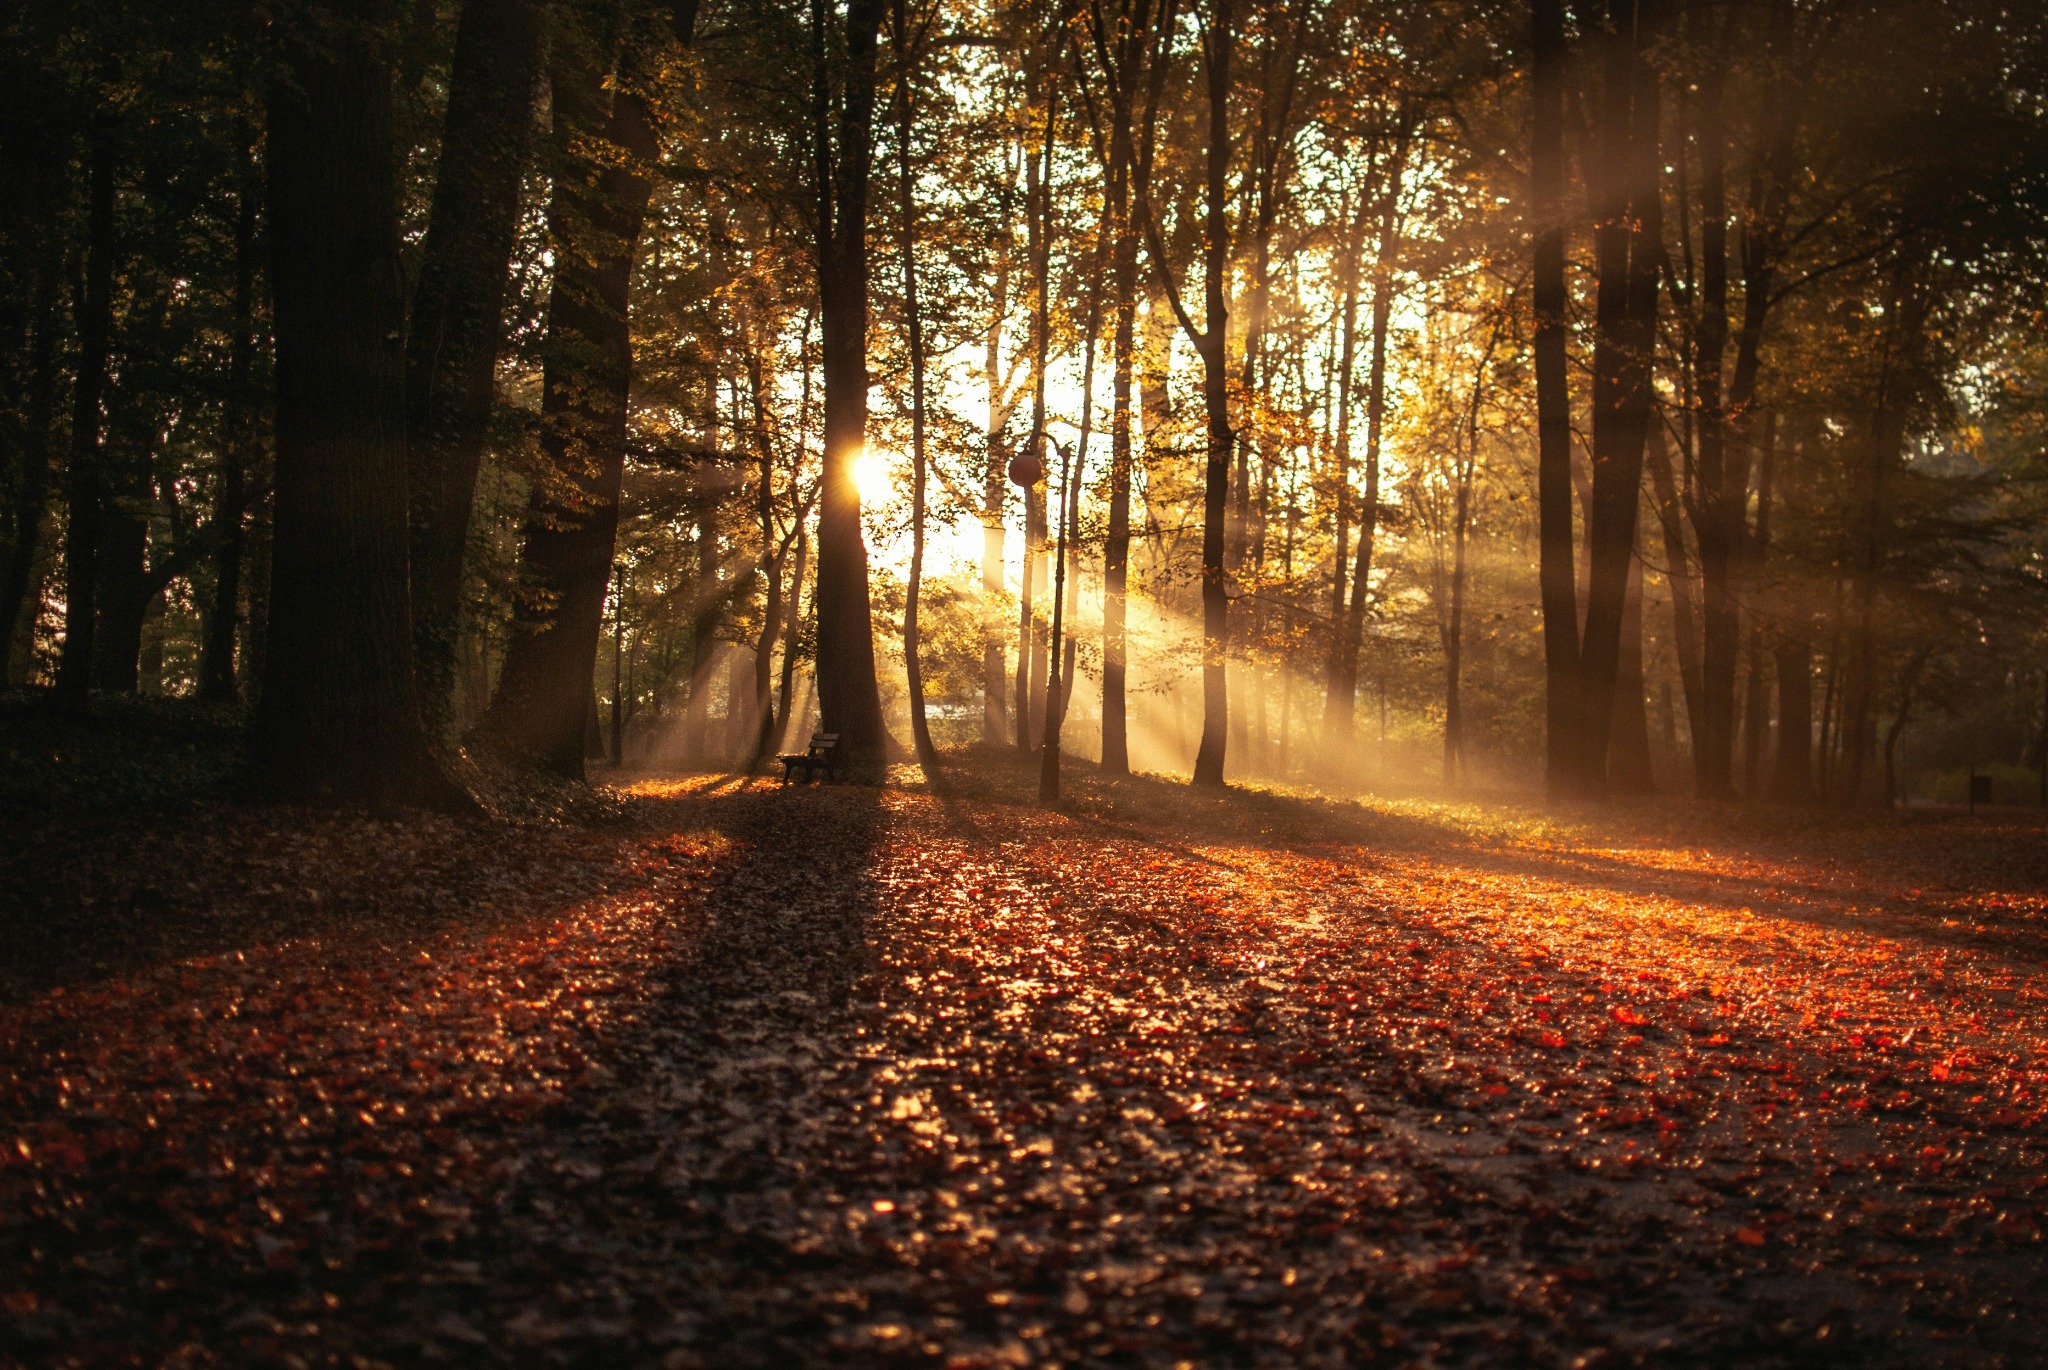 Sunlight through autumn forest